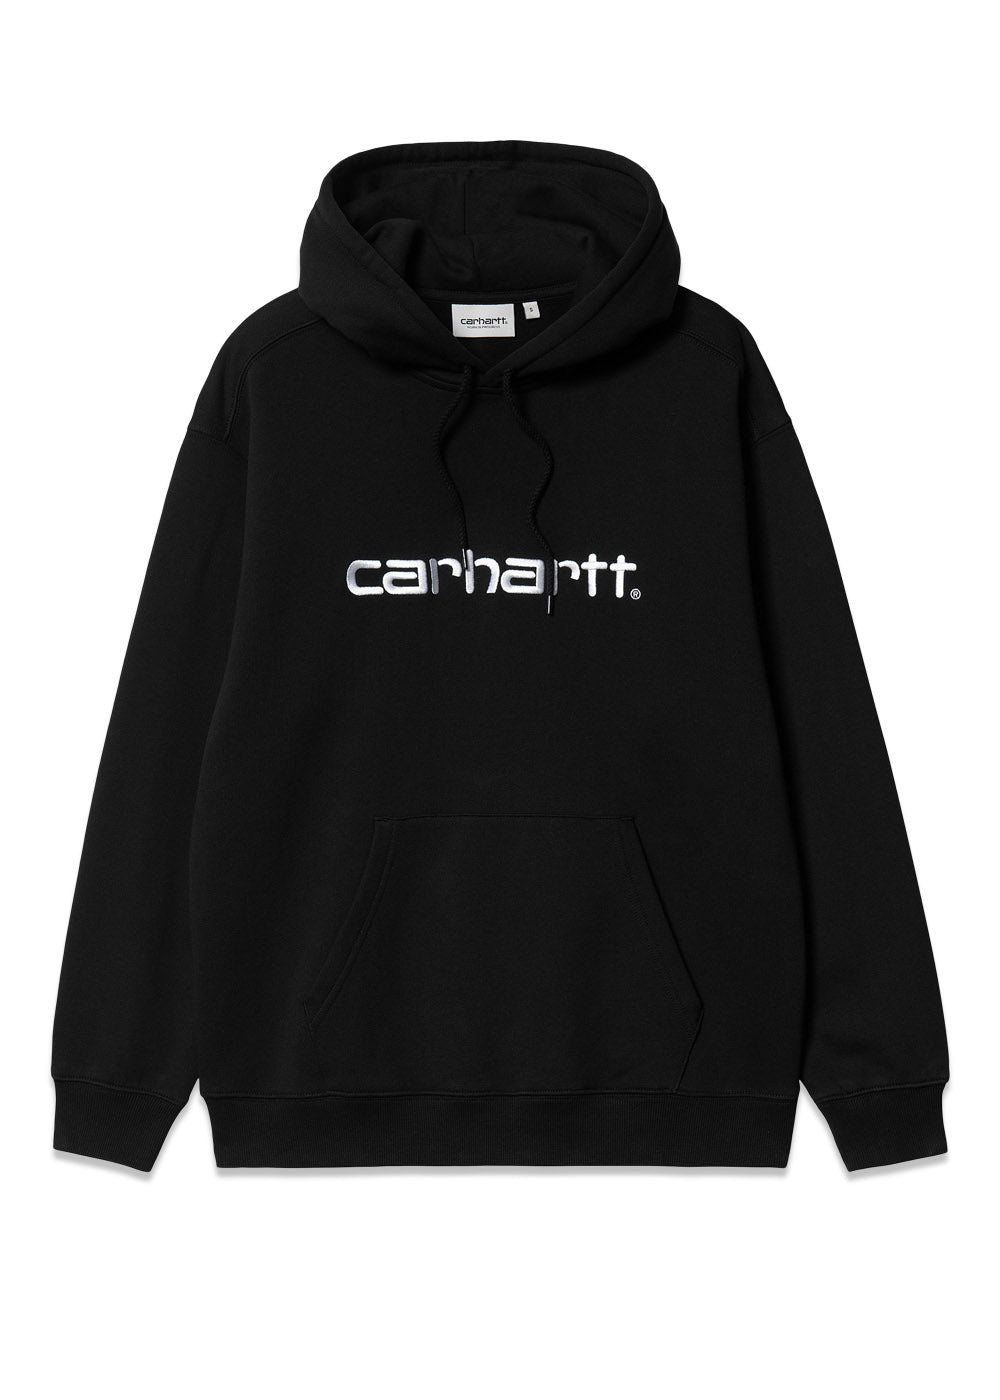 Carhartt WIP's W' Hooded Carhartt Sweatshirt - Black / White. Køb sweatshirts her.